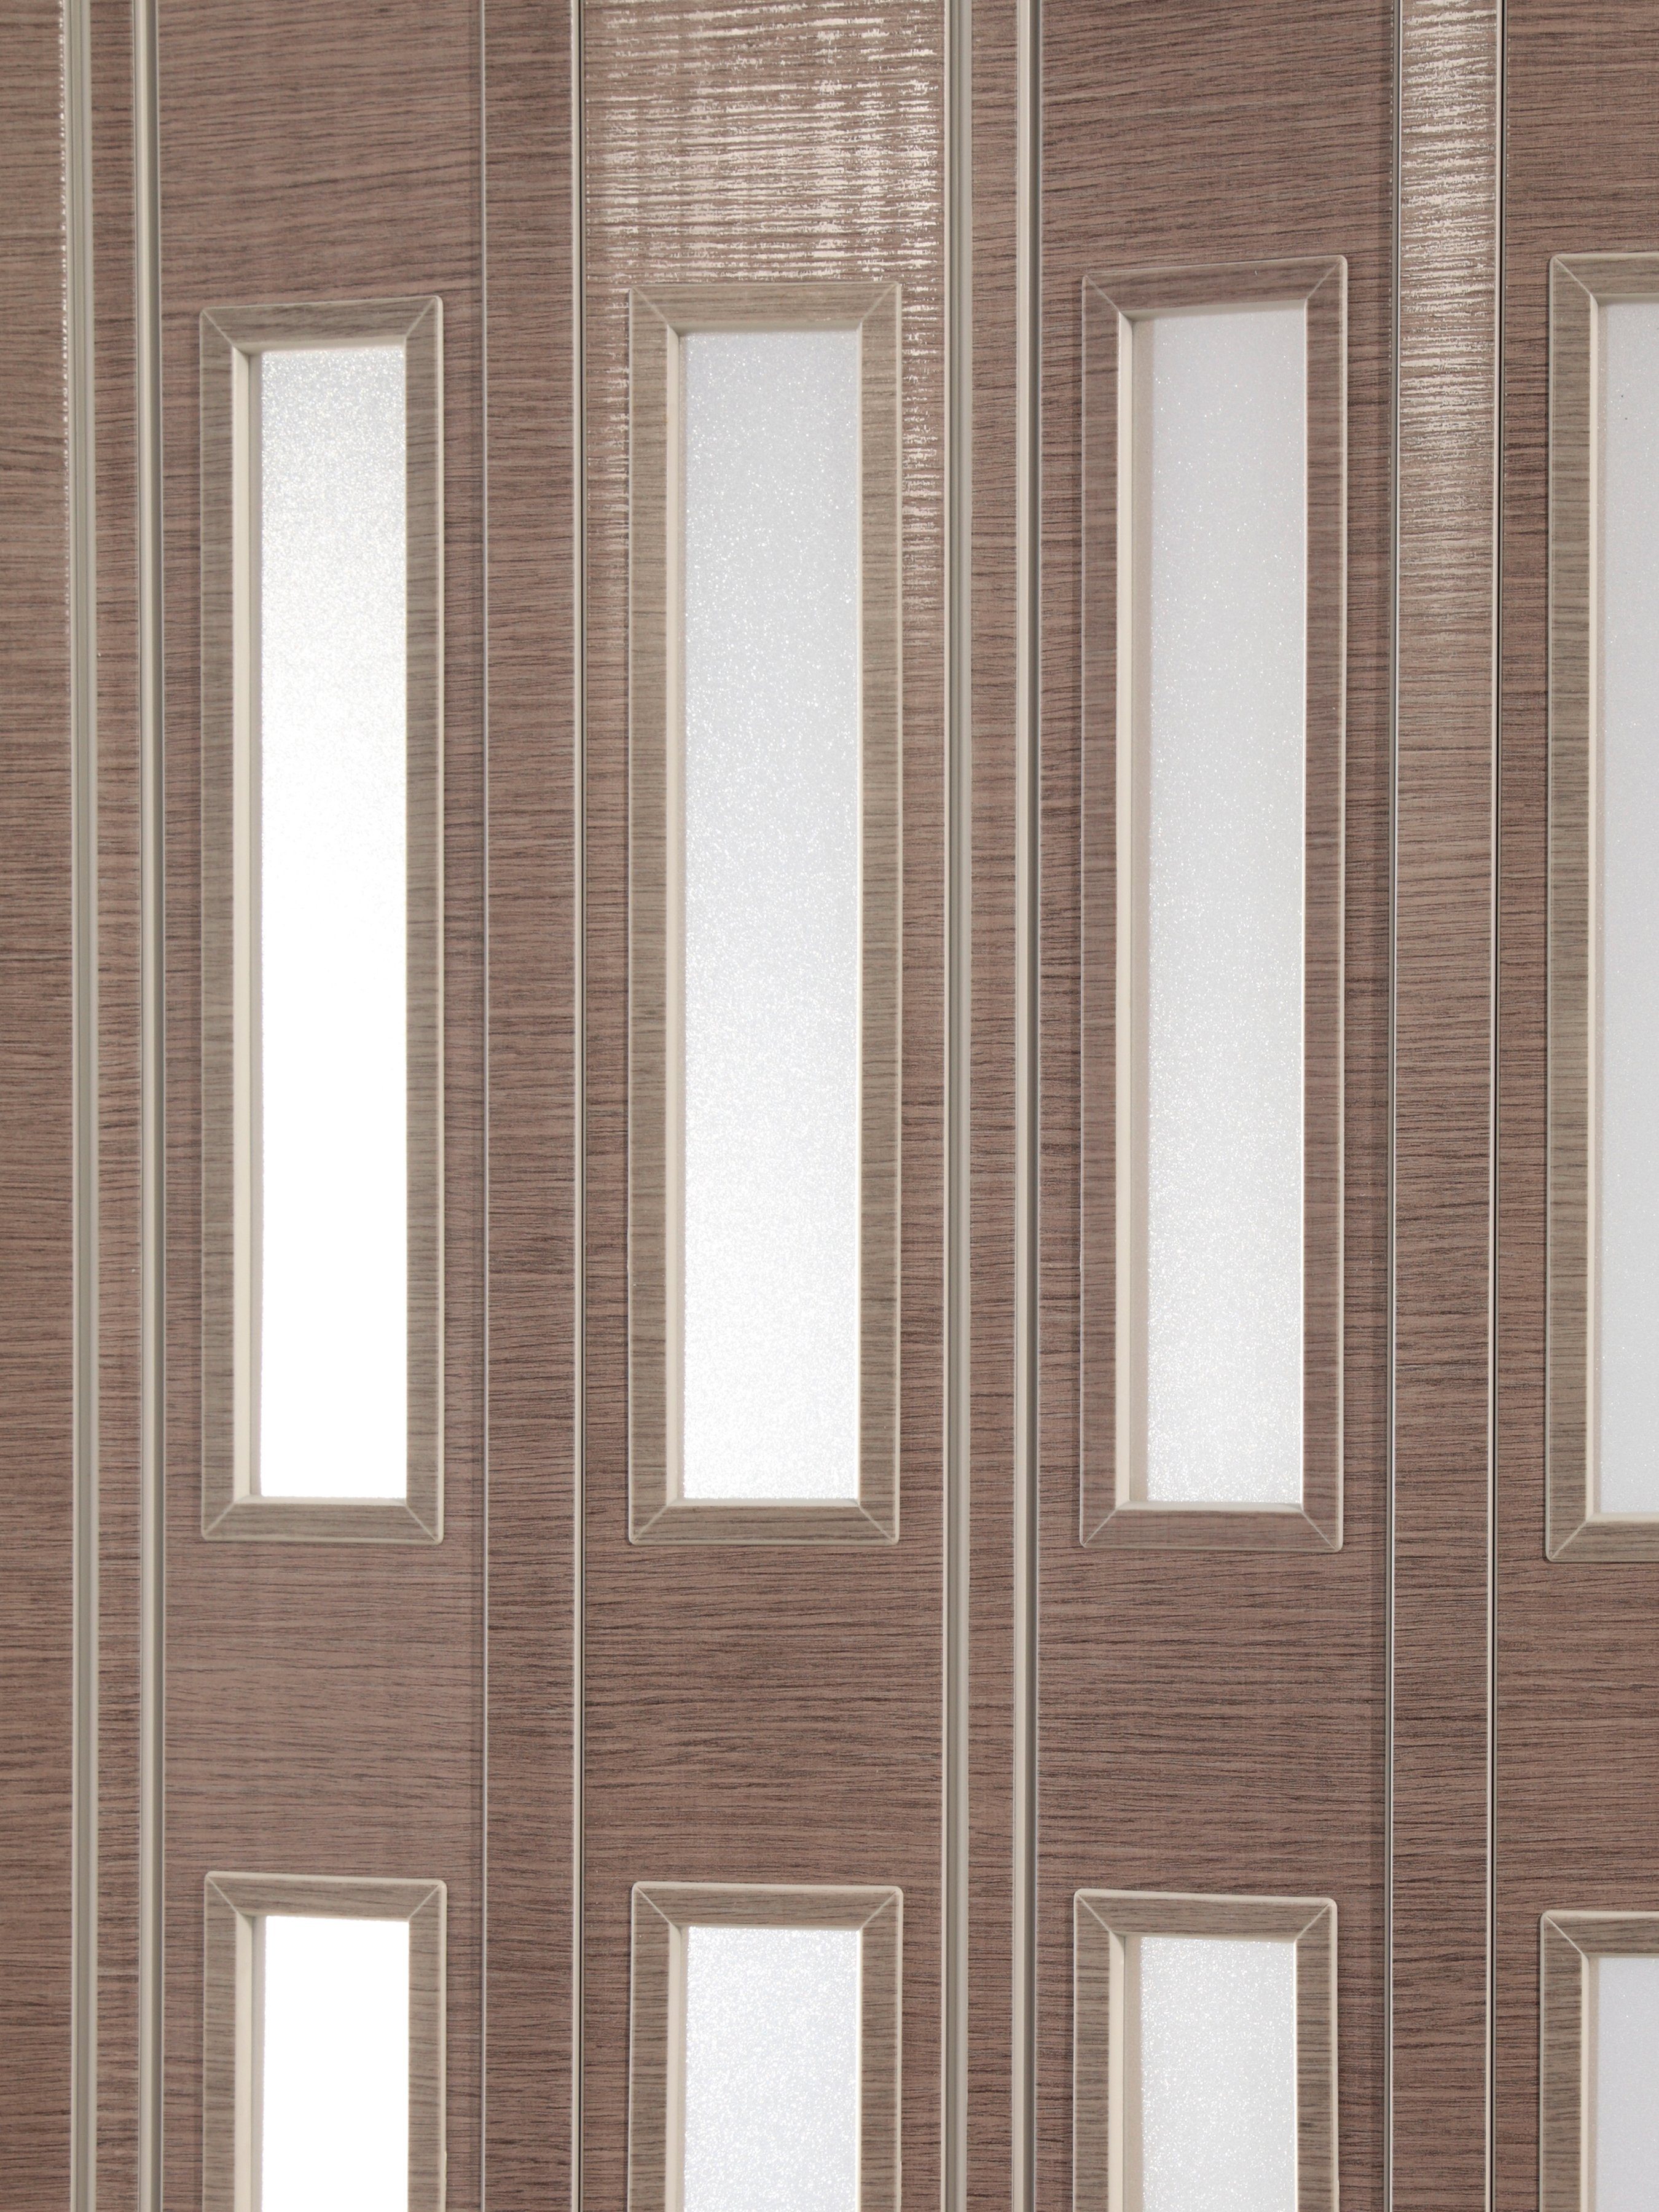 Fenster satiniert, 4 Festmaß taupe, 87 eiche 202 m. Elvira, Falttür Forte cm x